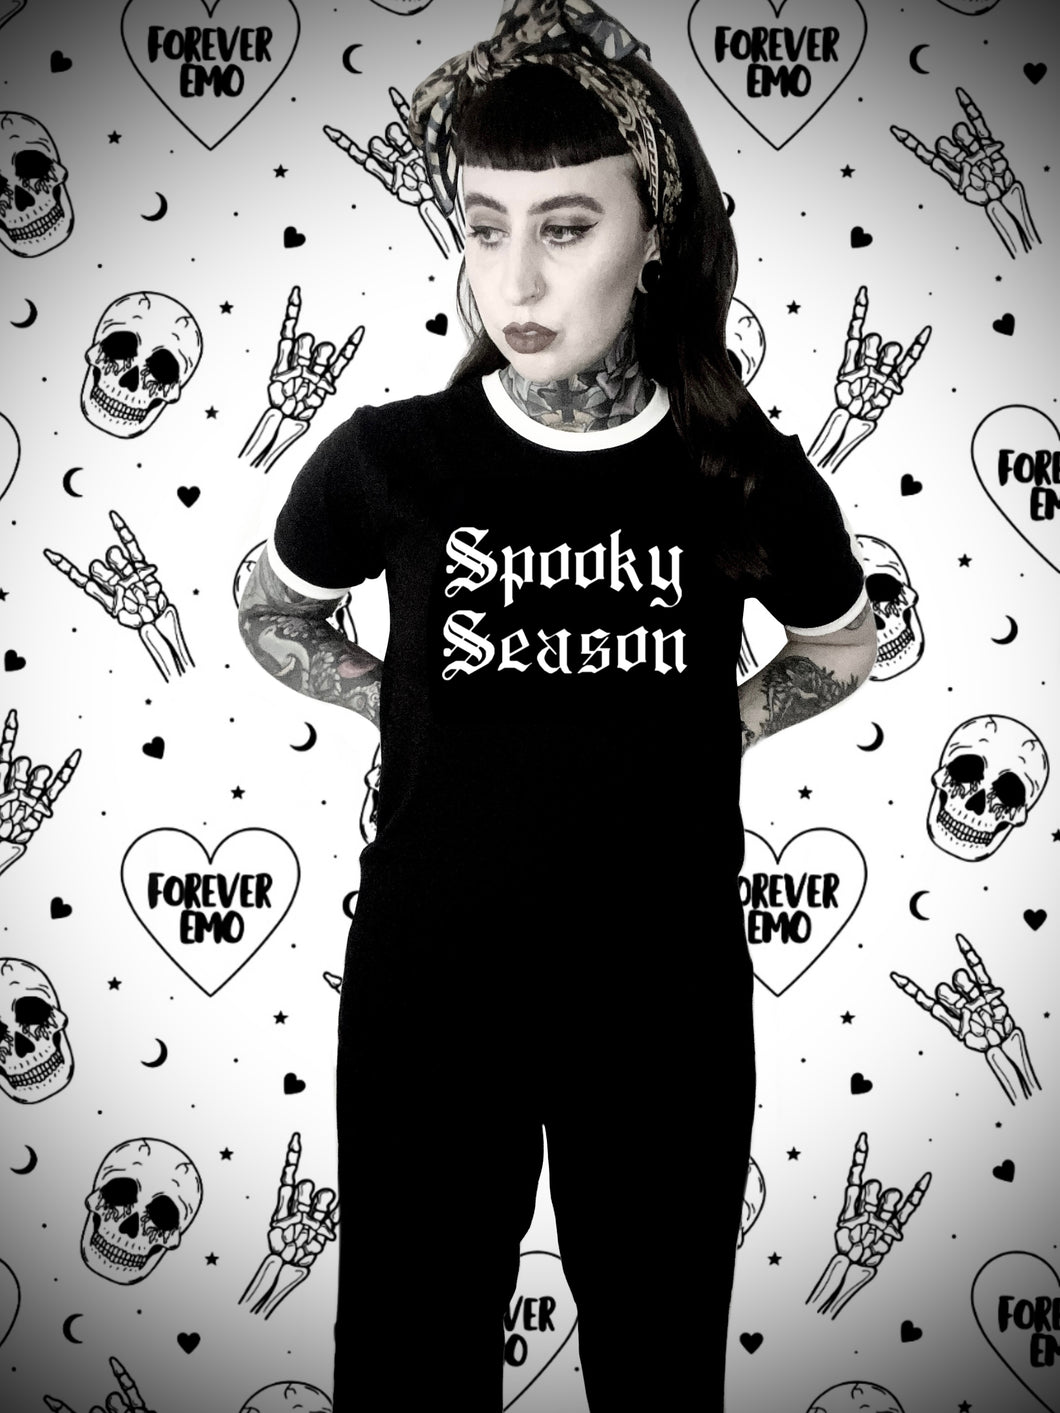 Spooky Season T-Shirt